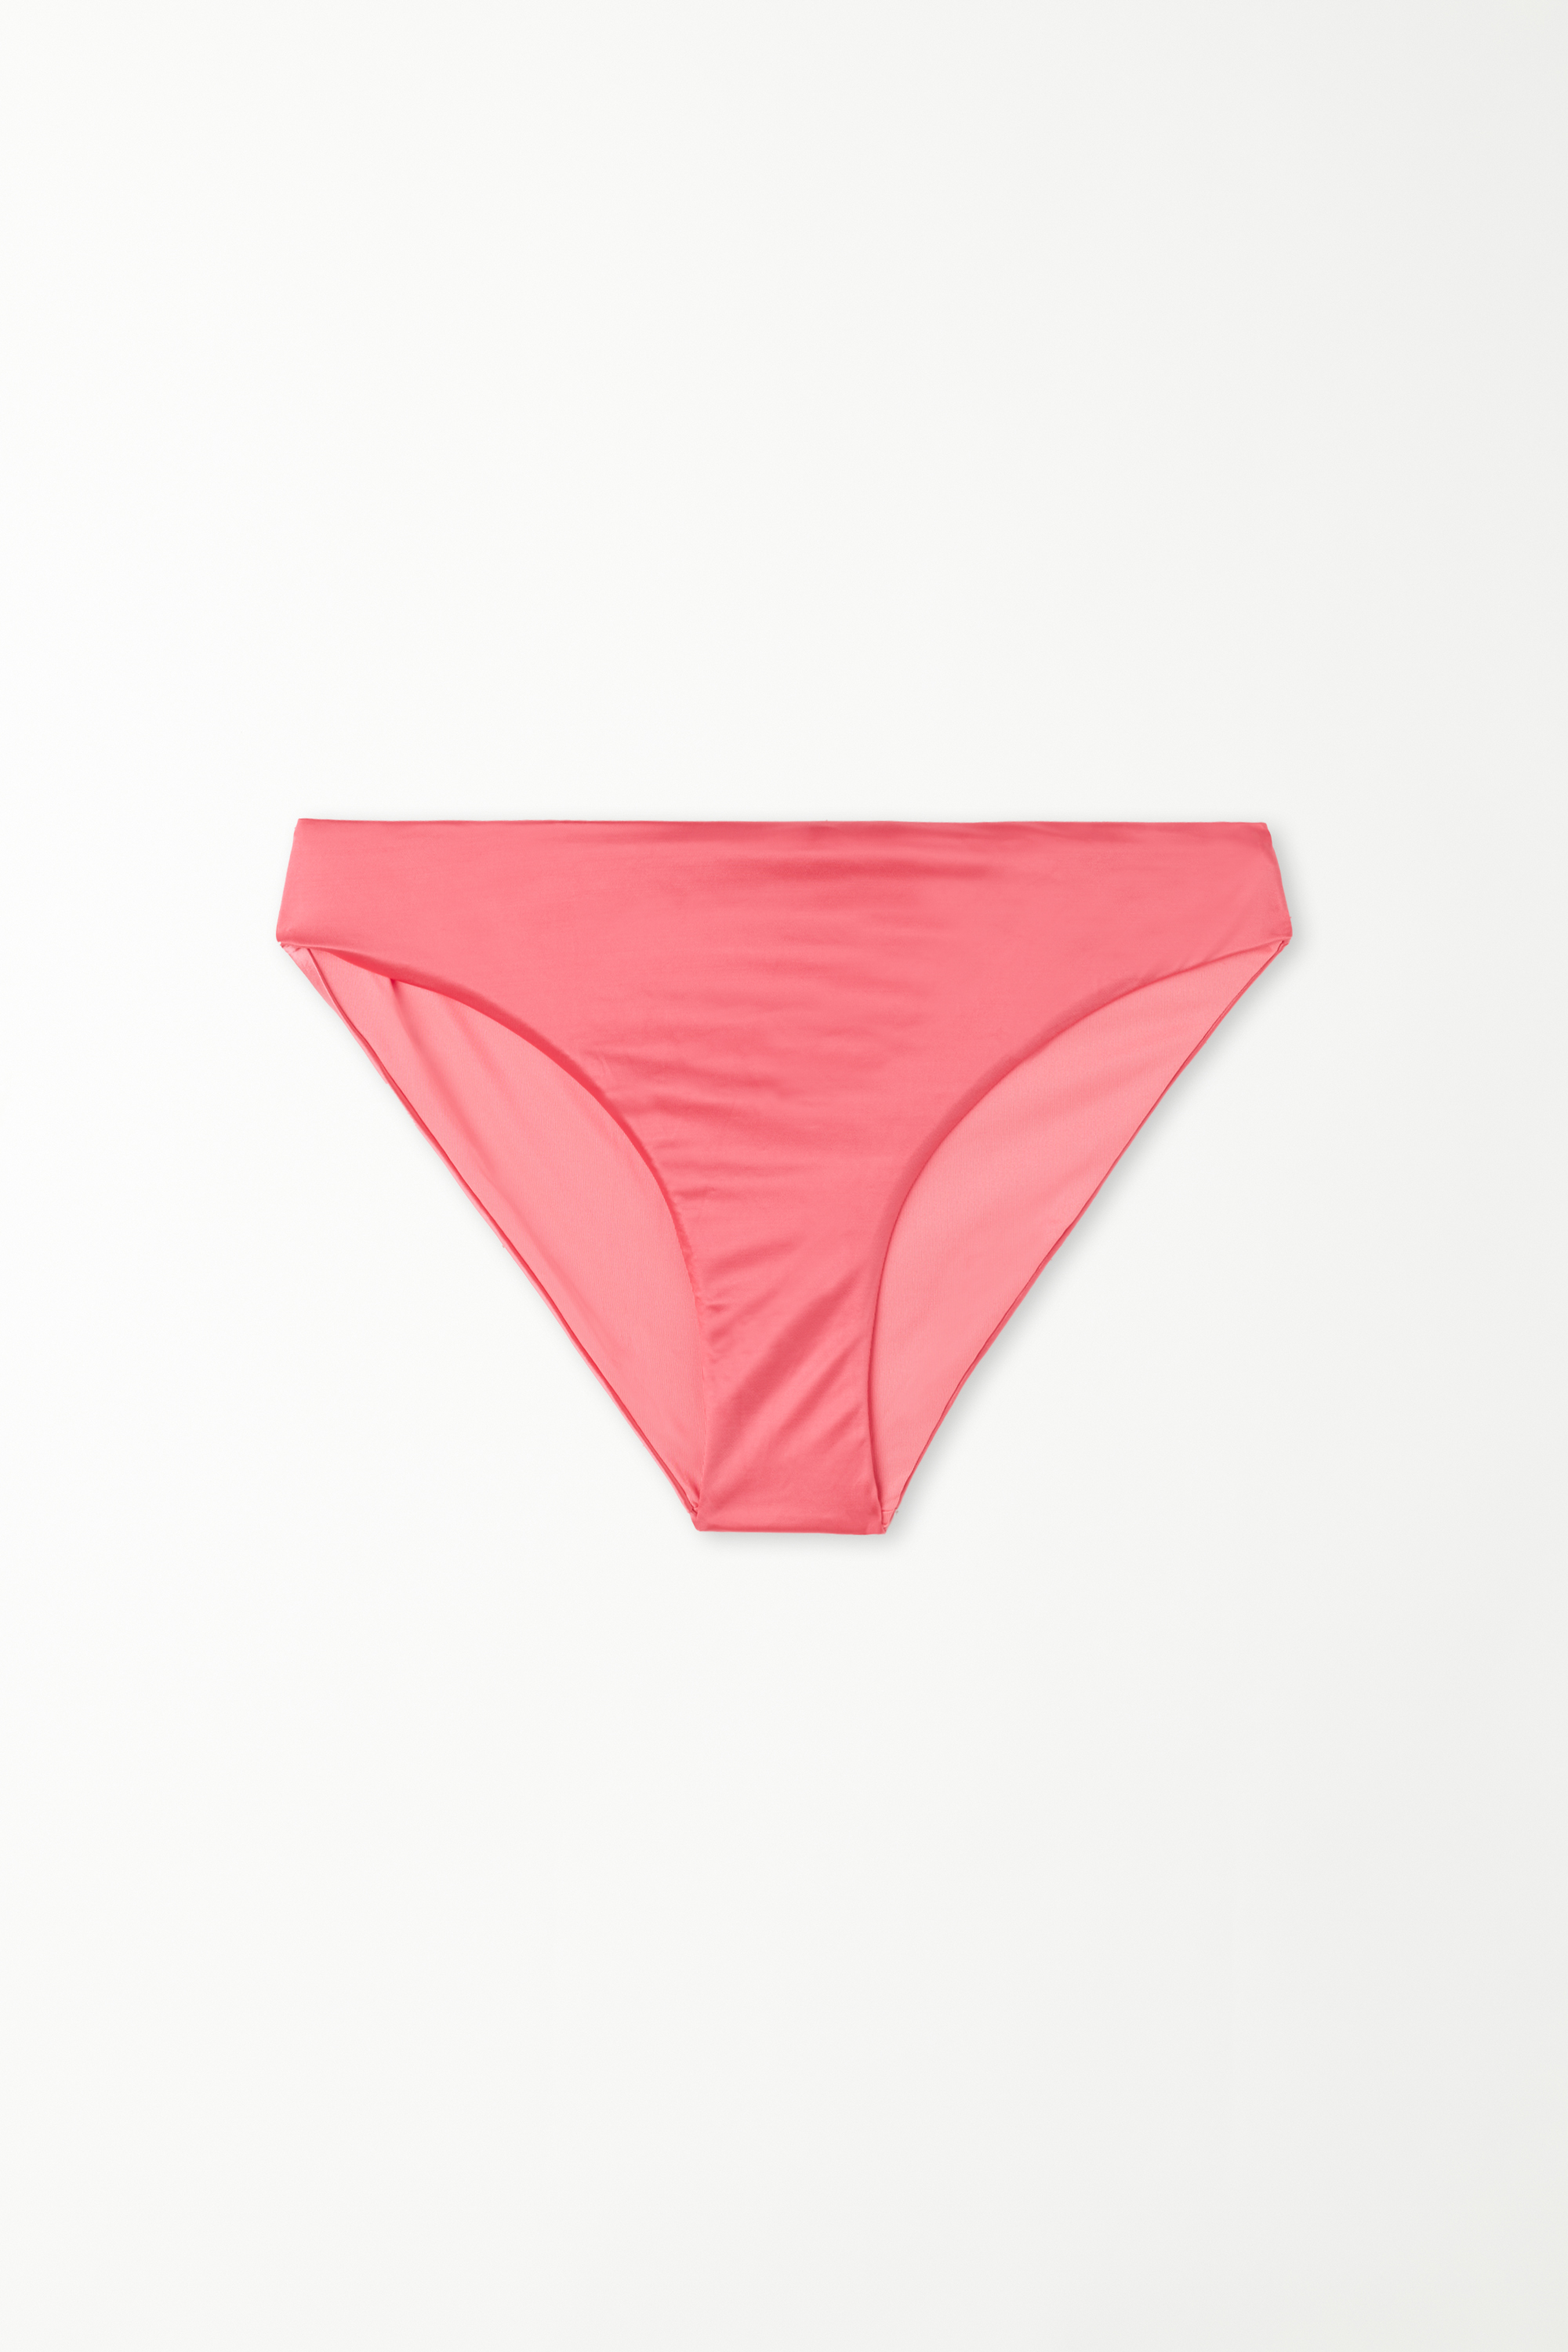 Klassischer, sommerlich rosafarbener Bikinislip Shiny